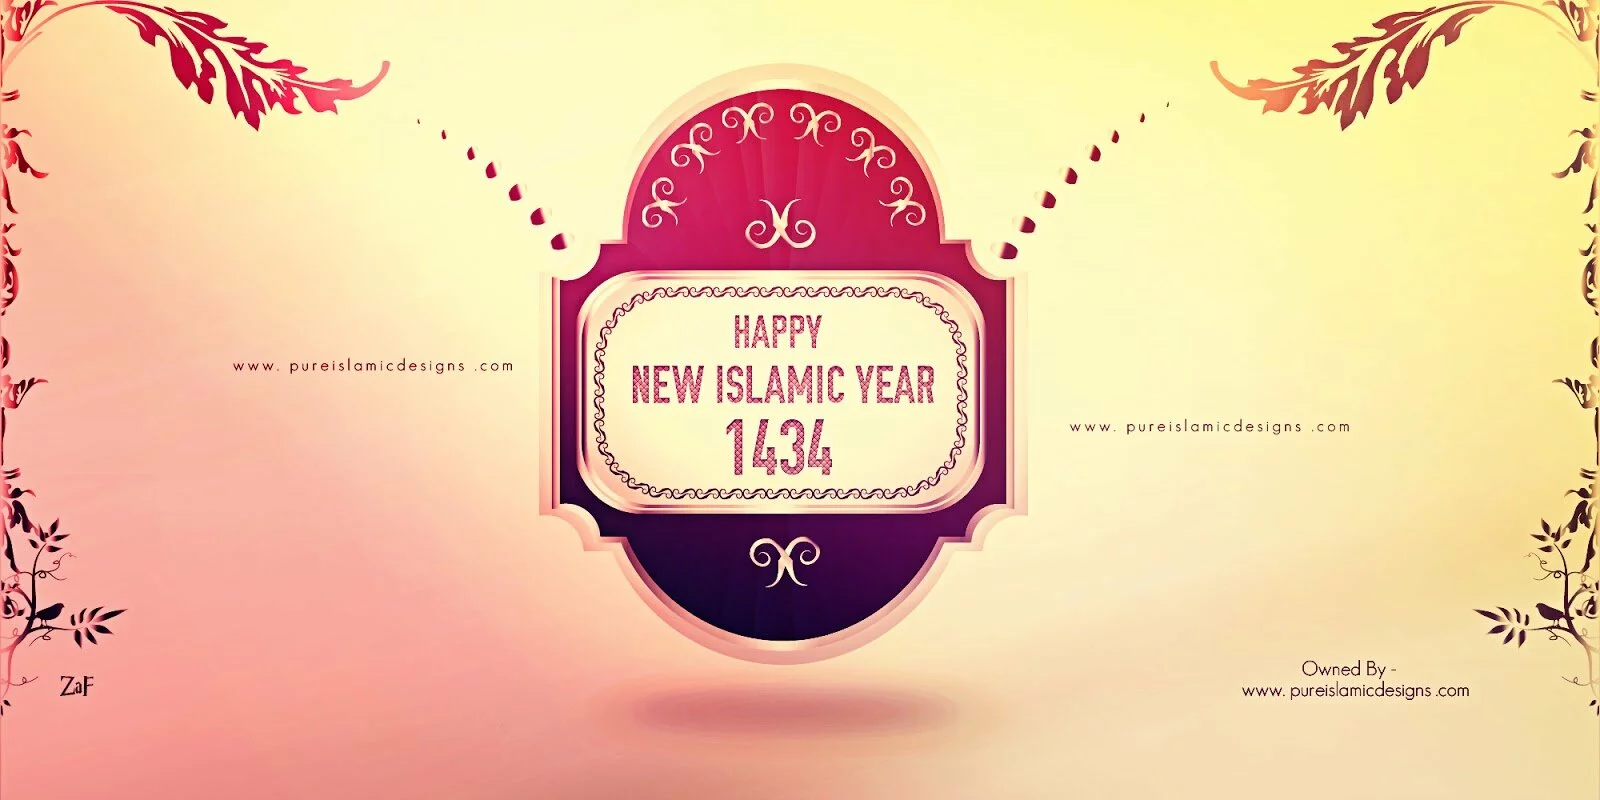 New Islamic Year